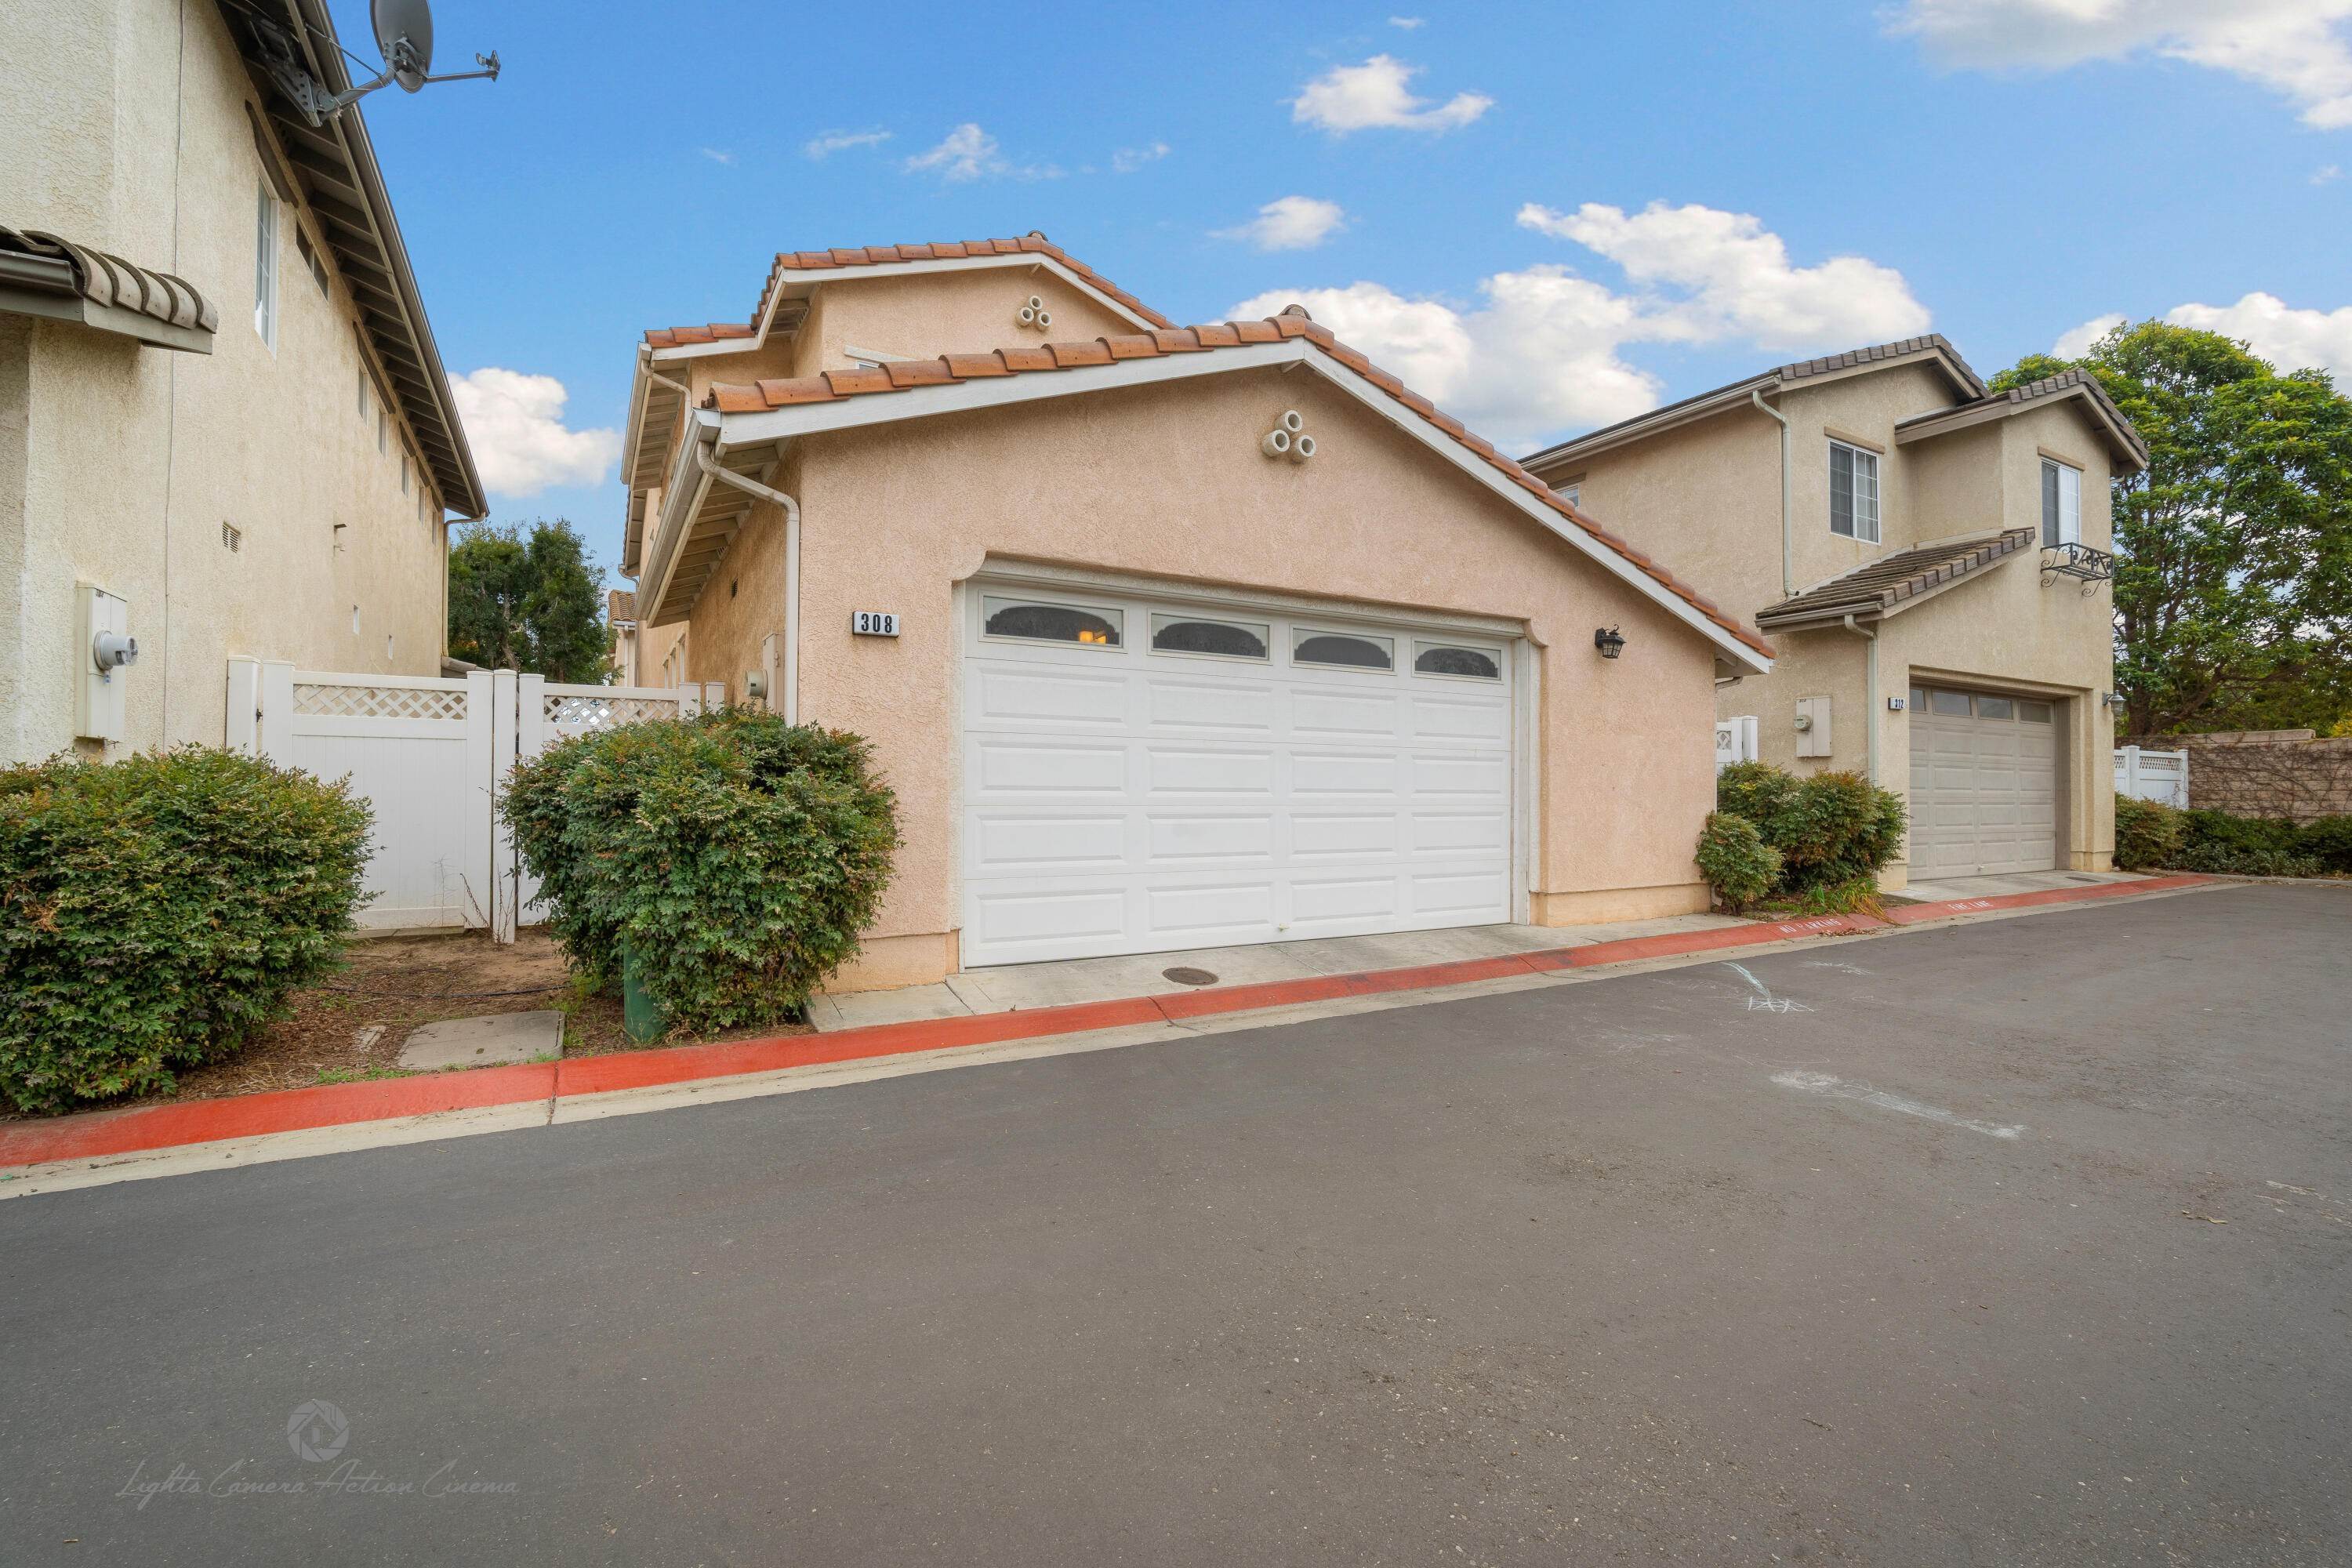 24. Estate for Sale at 308 Alcazar Drive Santa Maria, California 93455 United States